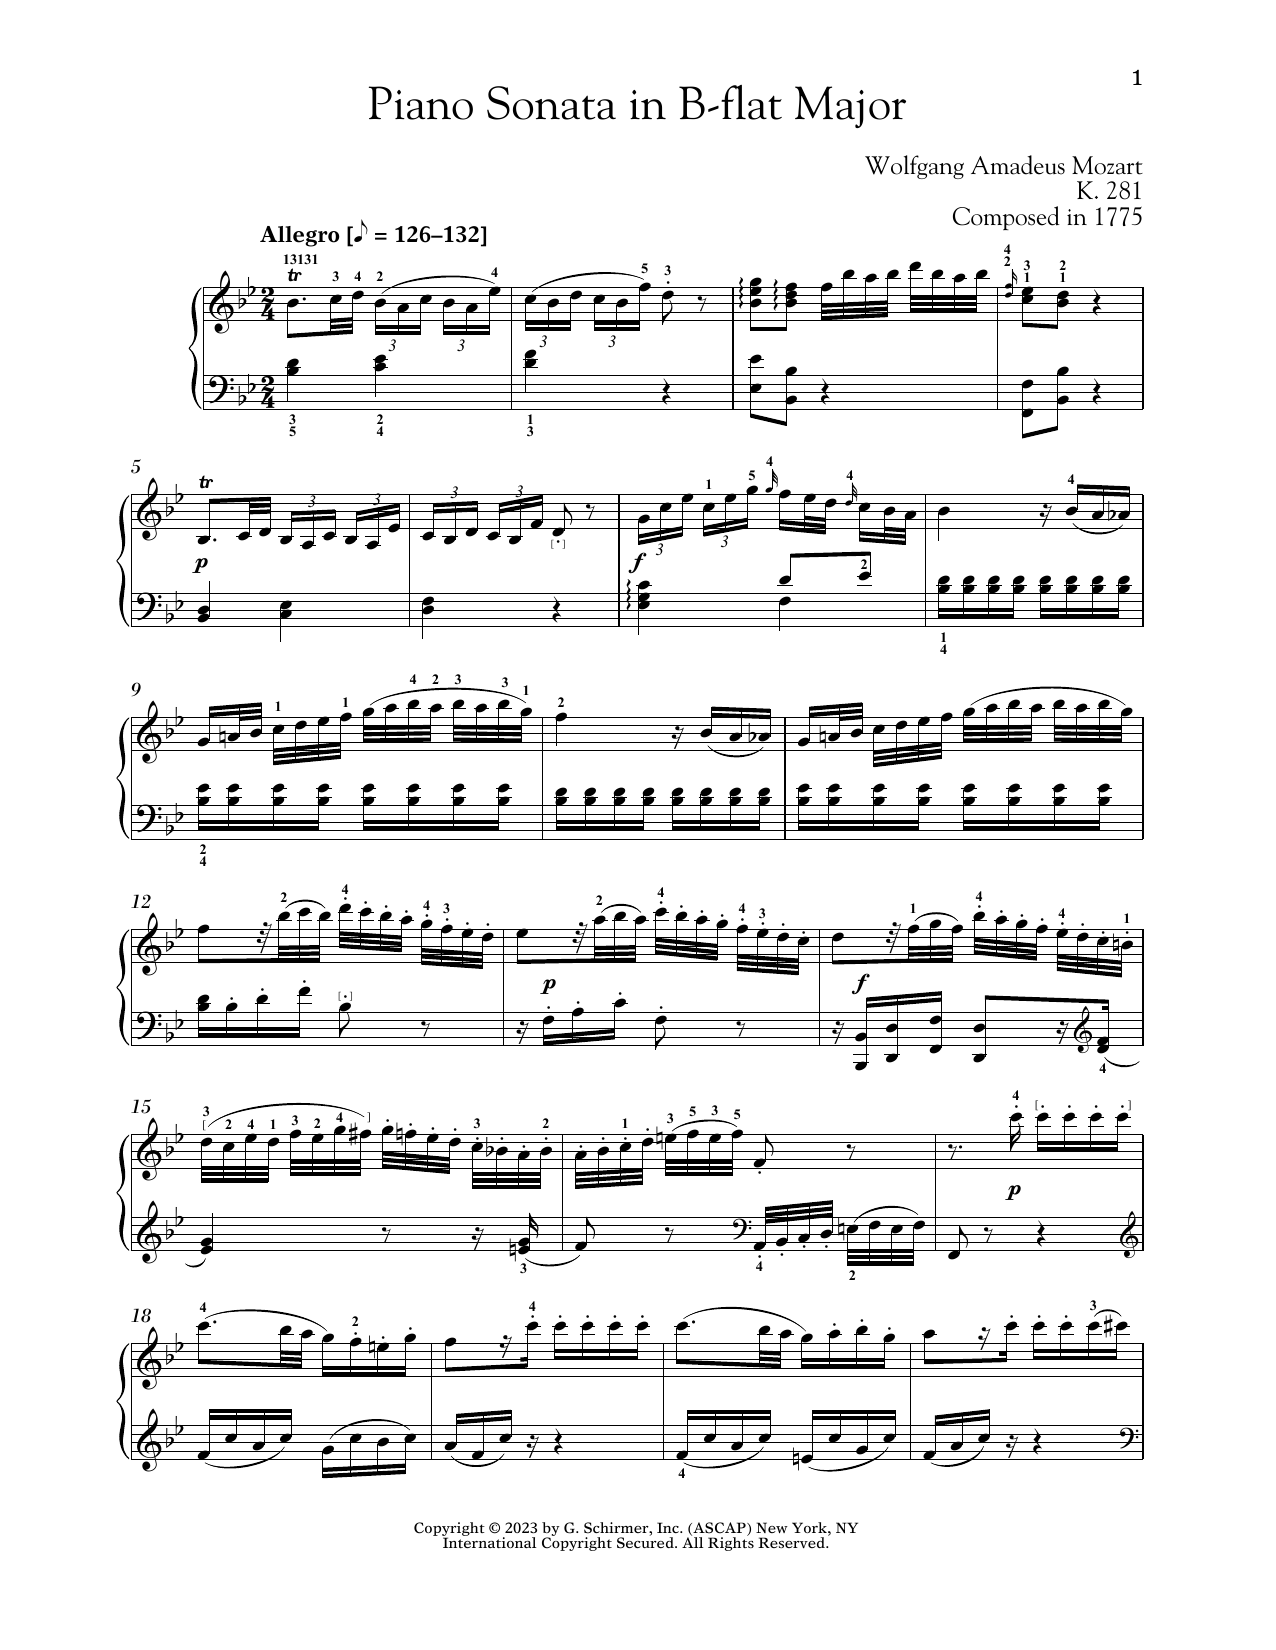 Wolfgang Amadeus Mozart Piano Sonata In B-flat Major, K. 281 Sheet Music Notes & Chords for Piano Solo - Download or Print PDF